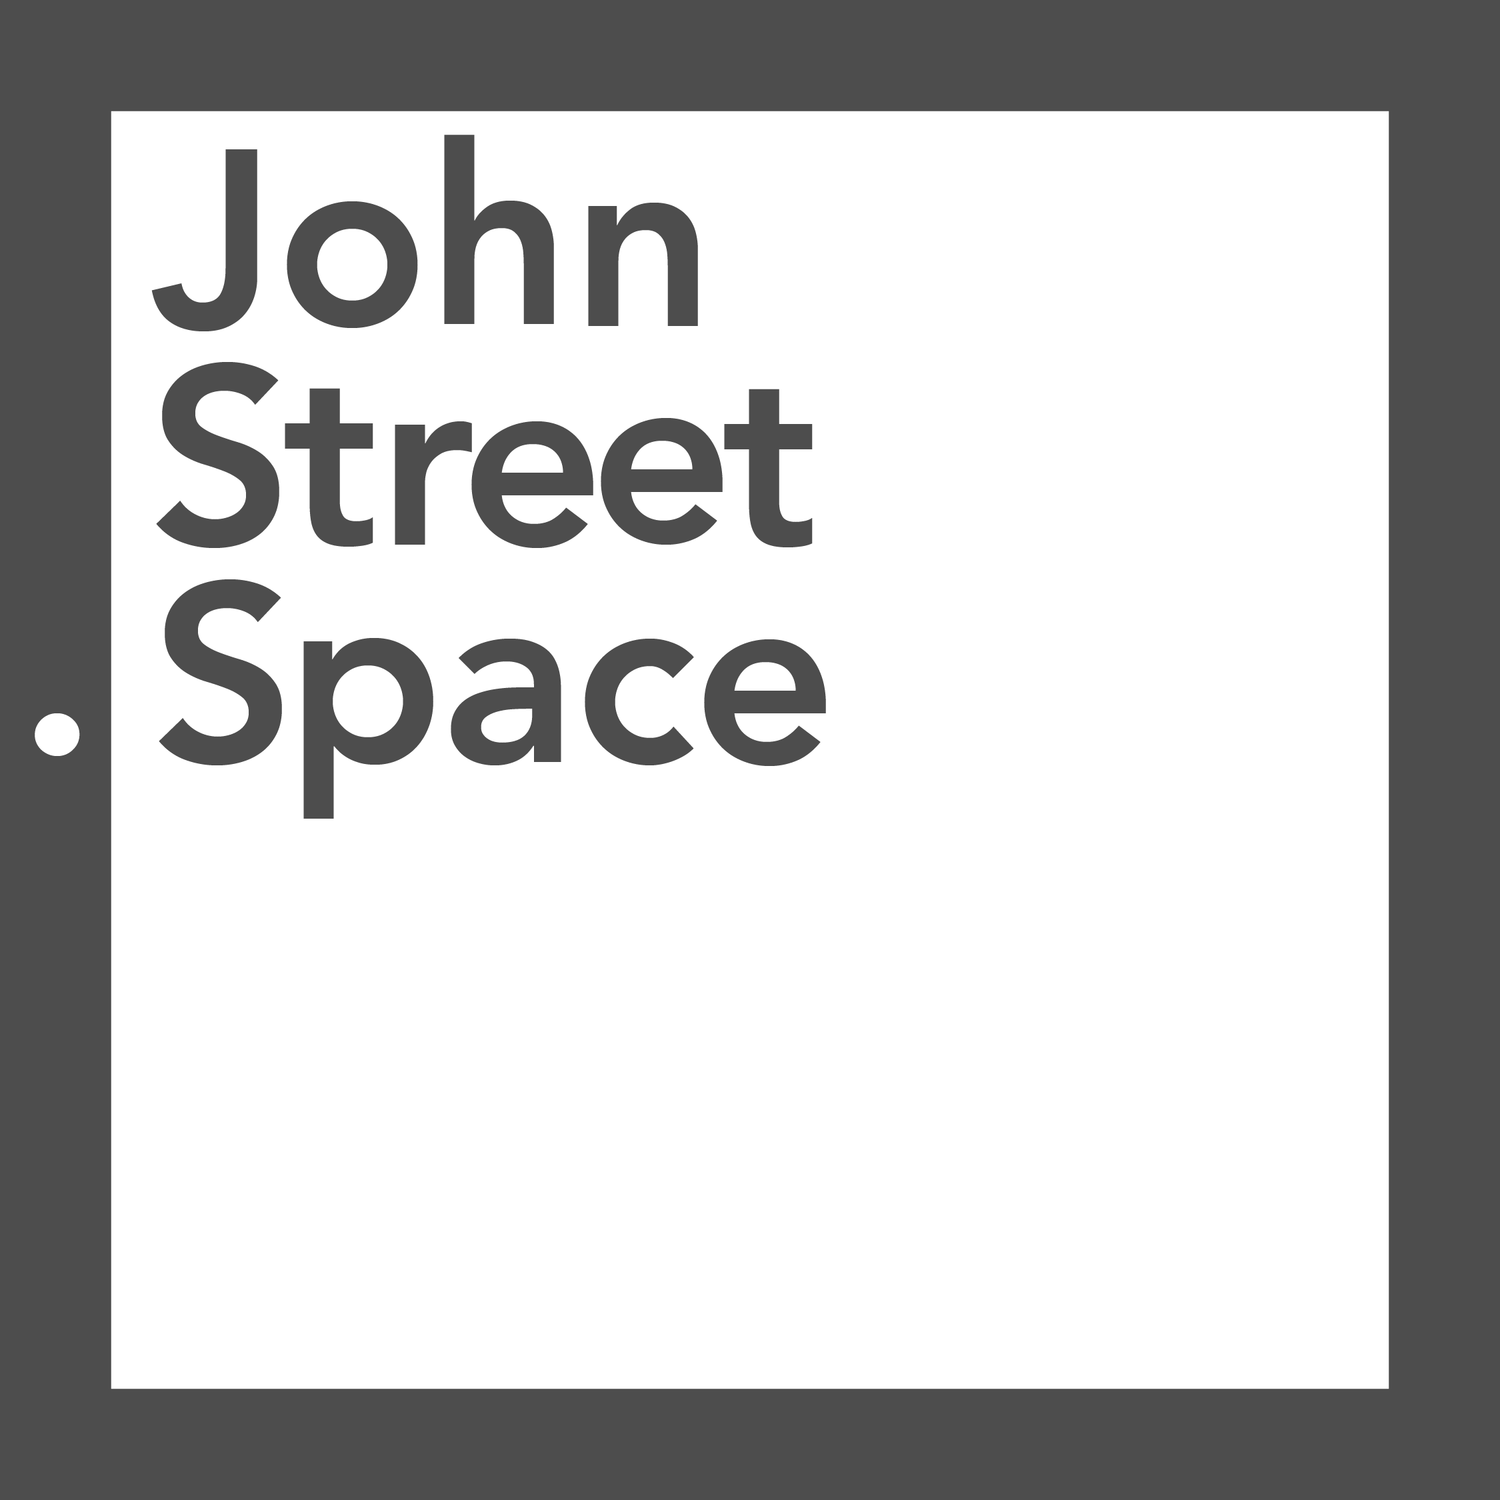 John Street Space